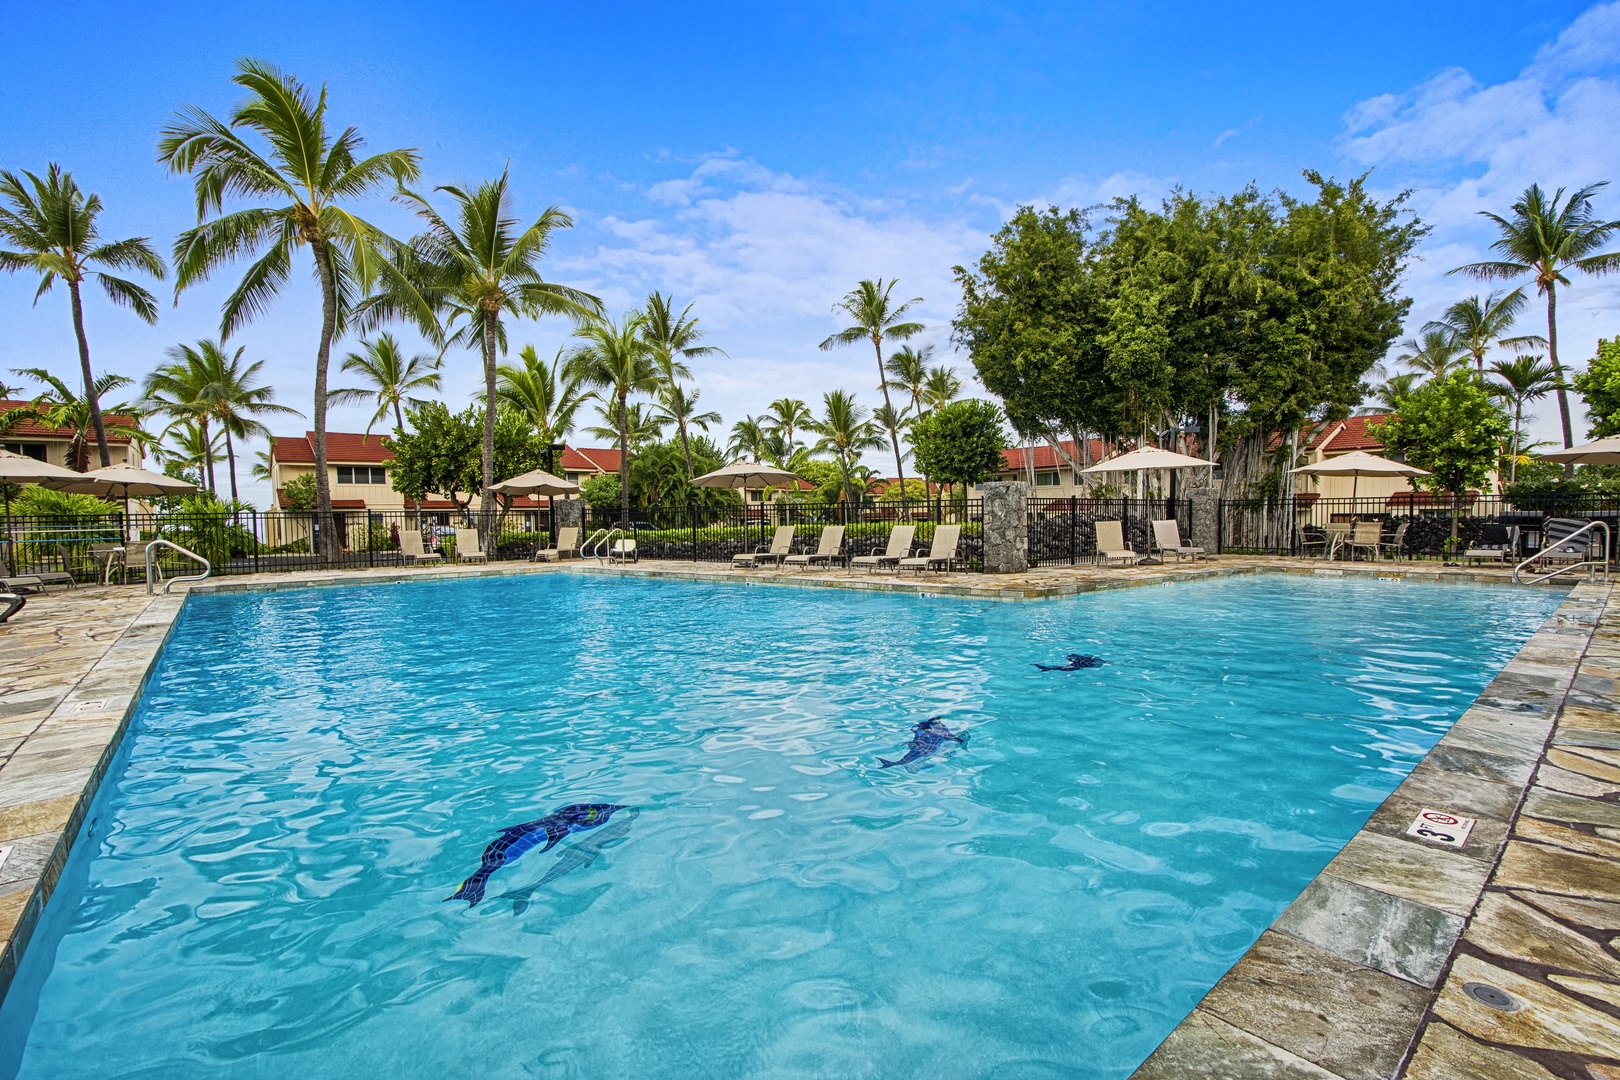 Kailua Kona Vacation Rentals, Keauhou Kona Surf & Racquet 2101 - Take a refreshing dip at the condo pool.